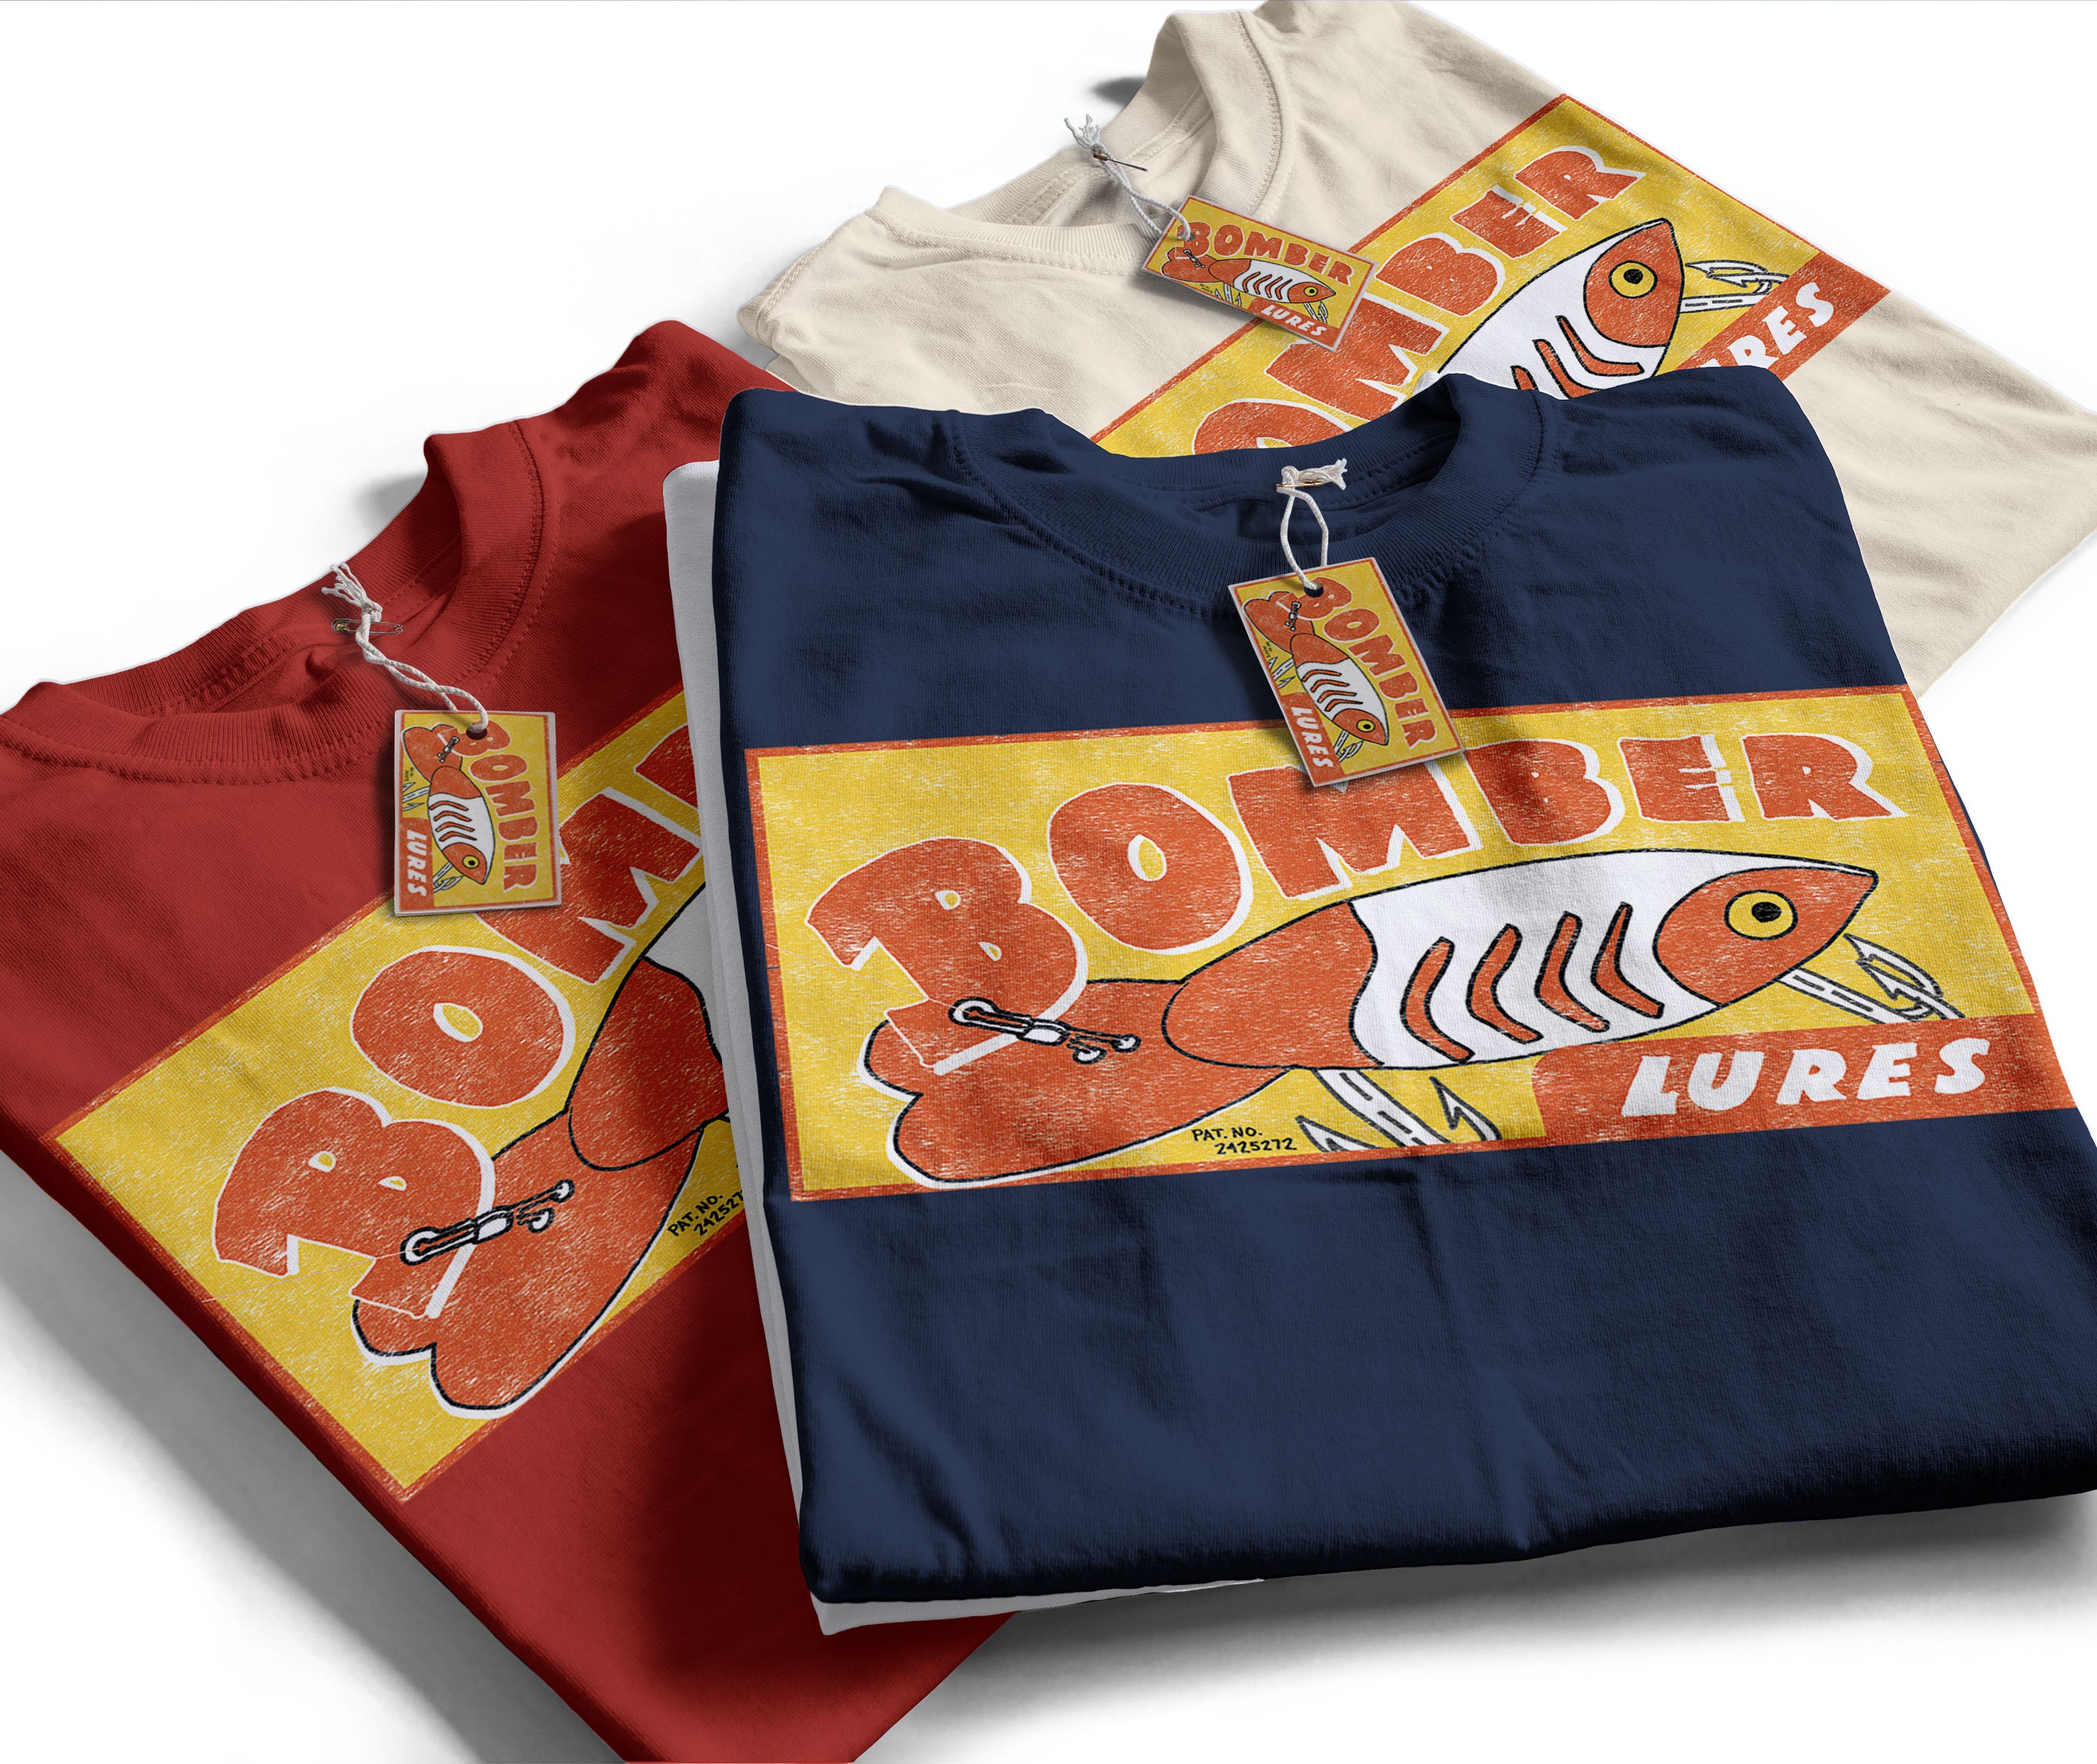 Bomber Lures Vintage Fishing Tackle T-shirt Fishing Baits Shirt